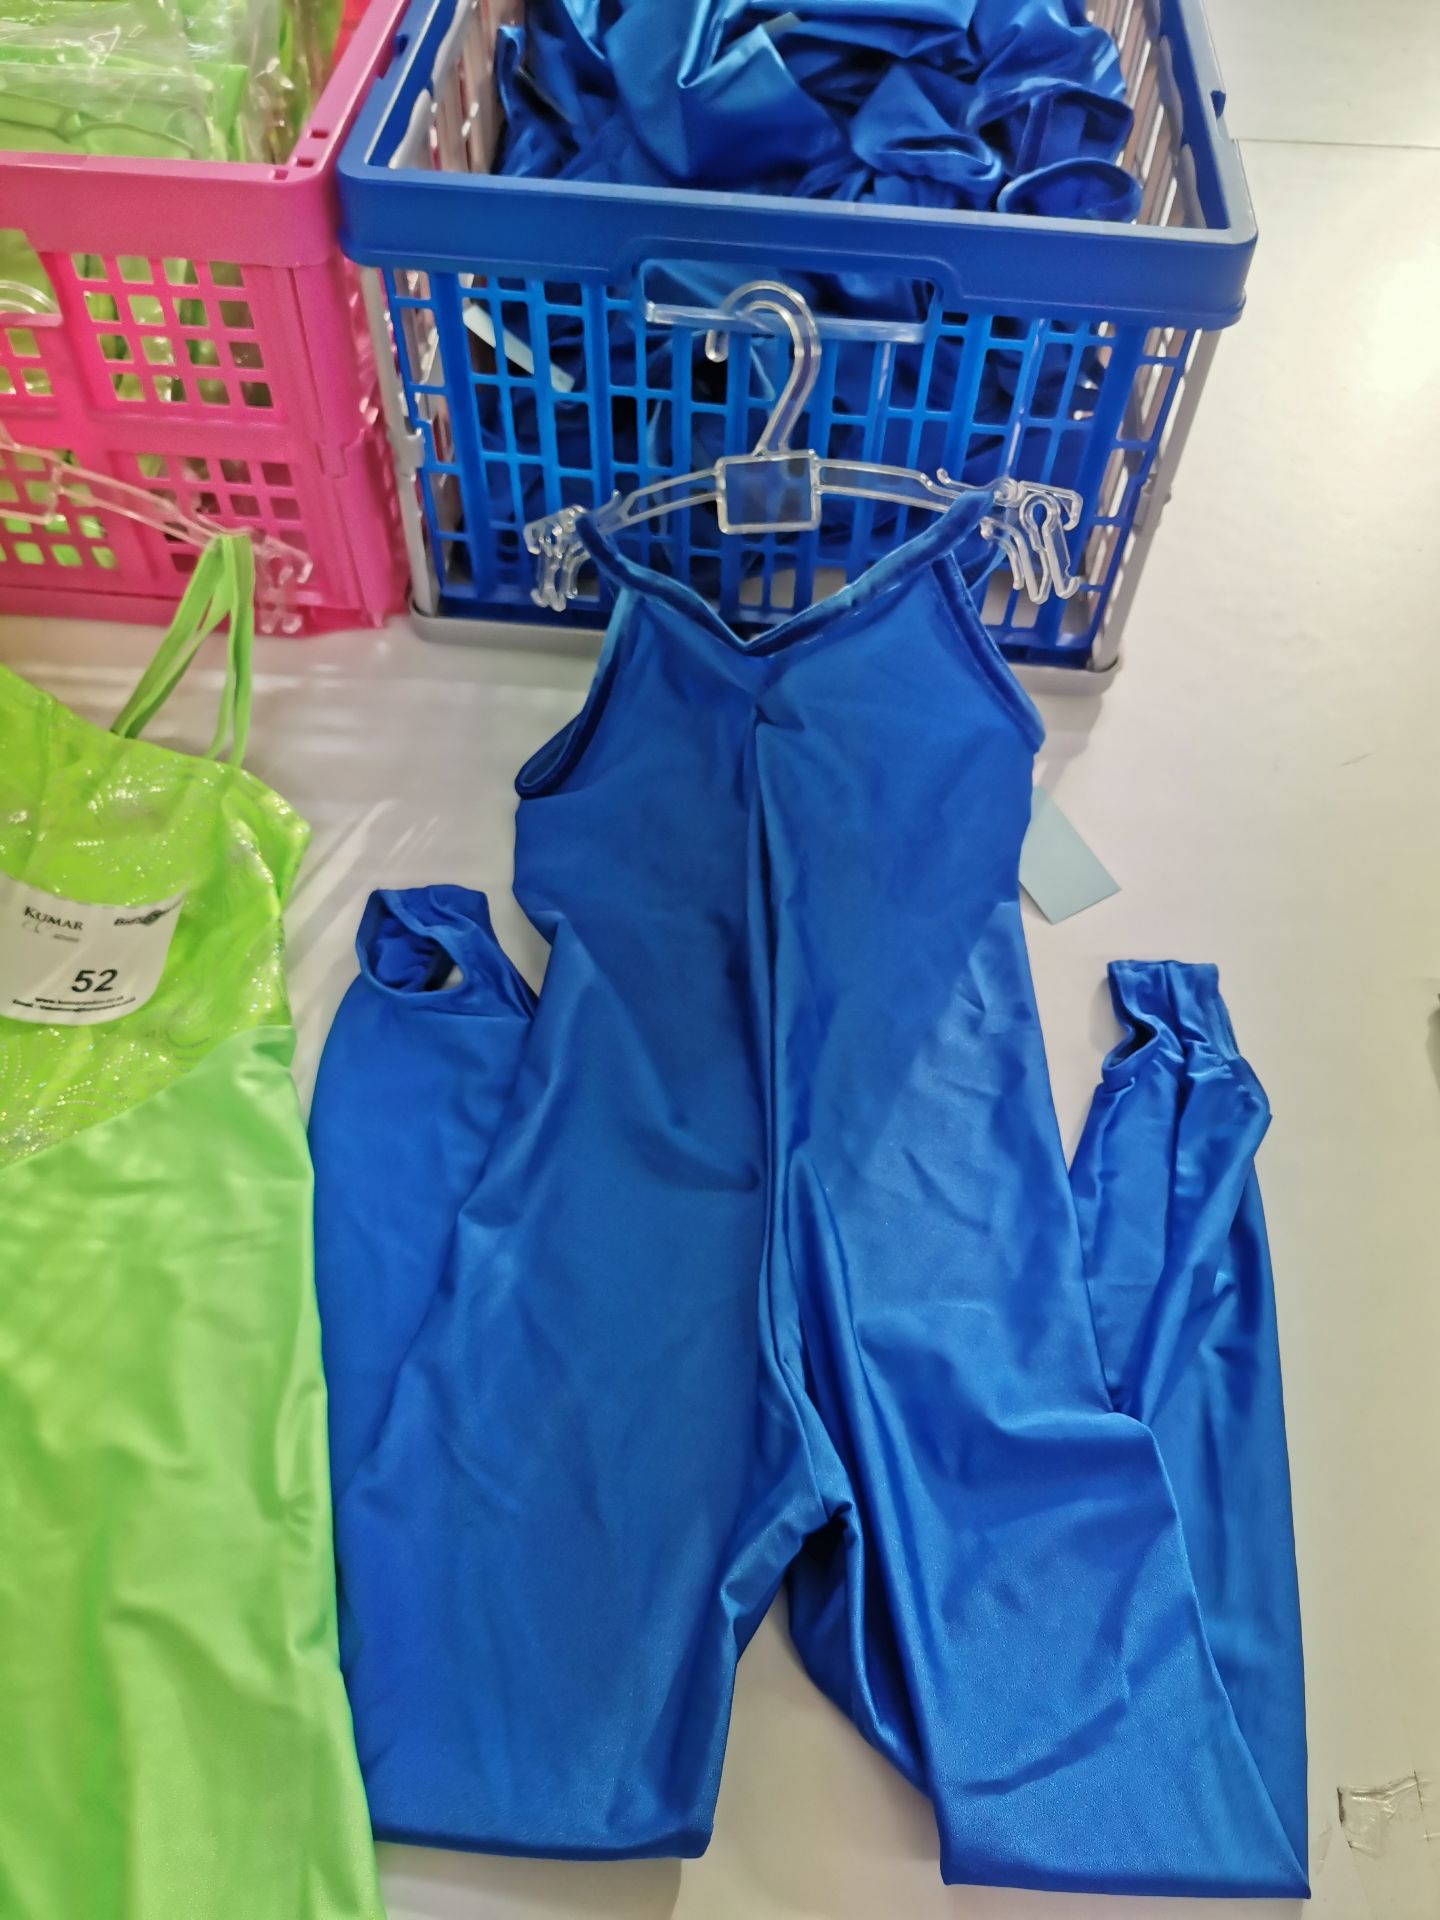 27pc Green bermuda dress, blue jump suit, Various sizes - Image 2 of 4